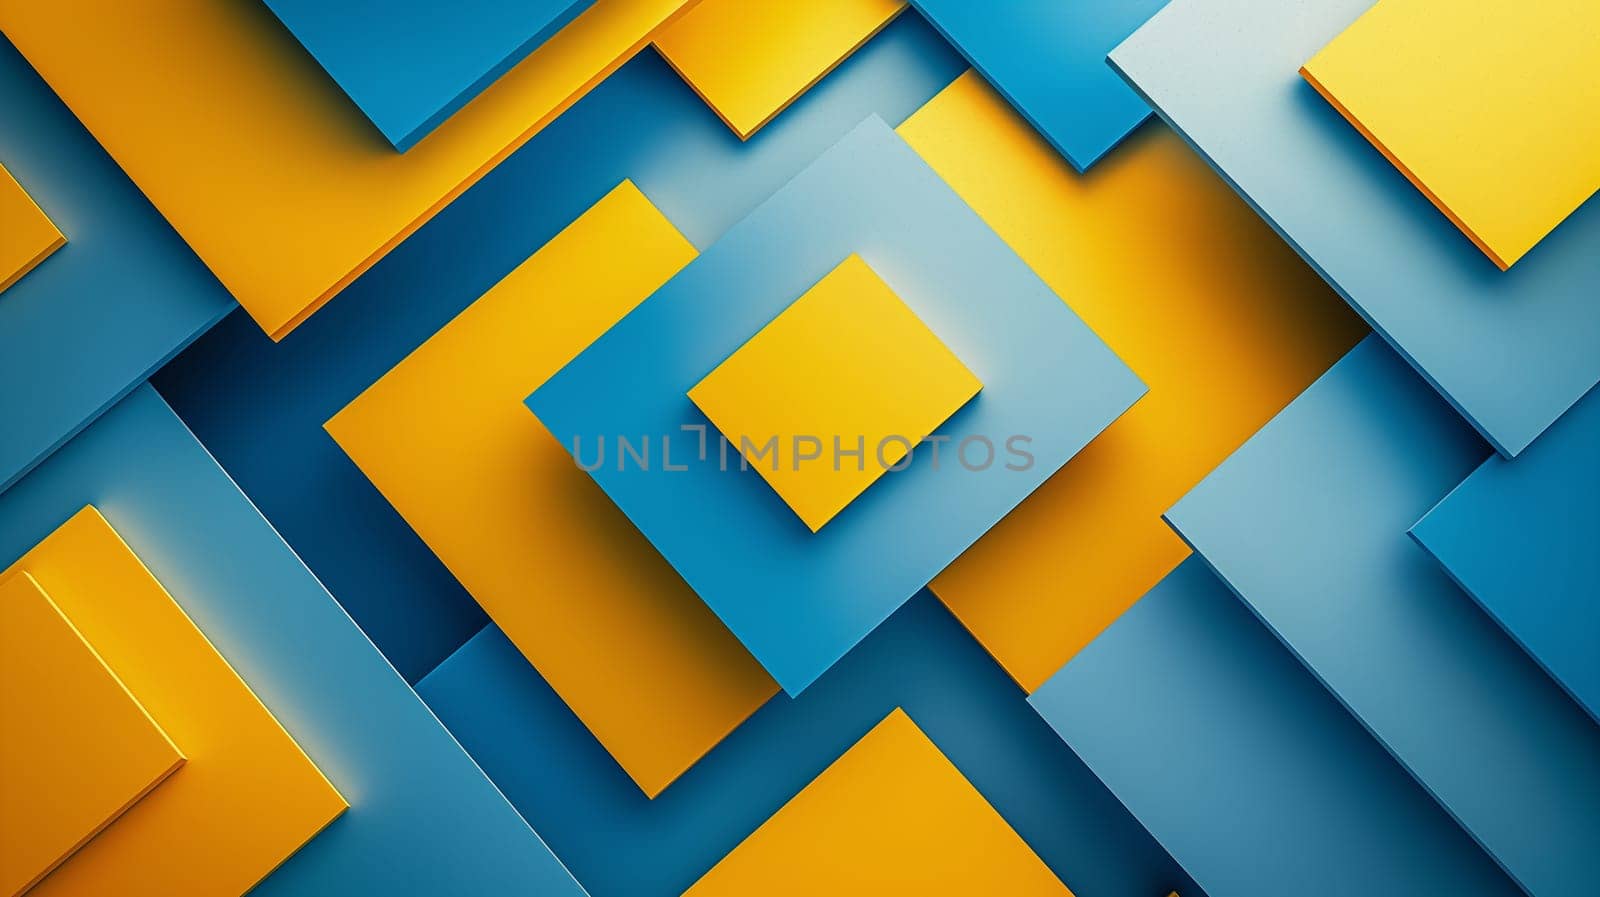 Geometric Patterns of Interwoven Yellow and Blue Square Panels by chrisroll